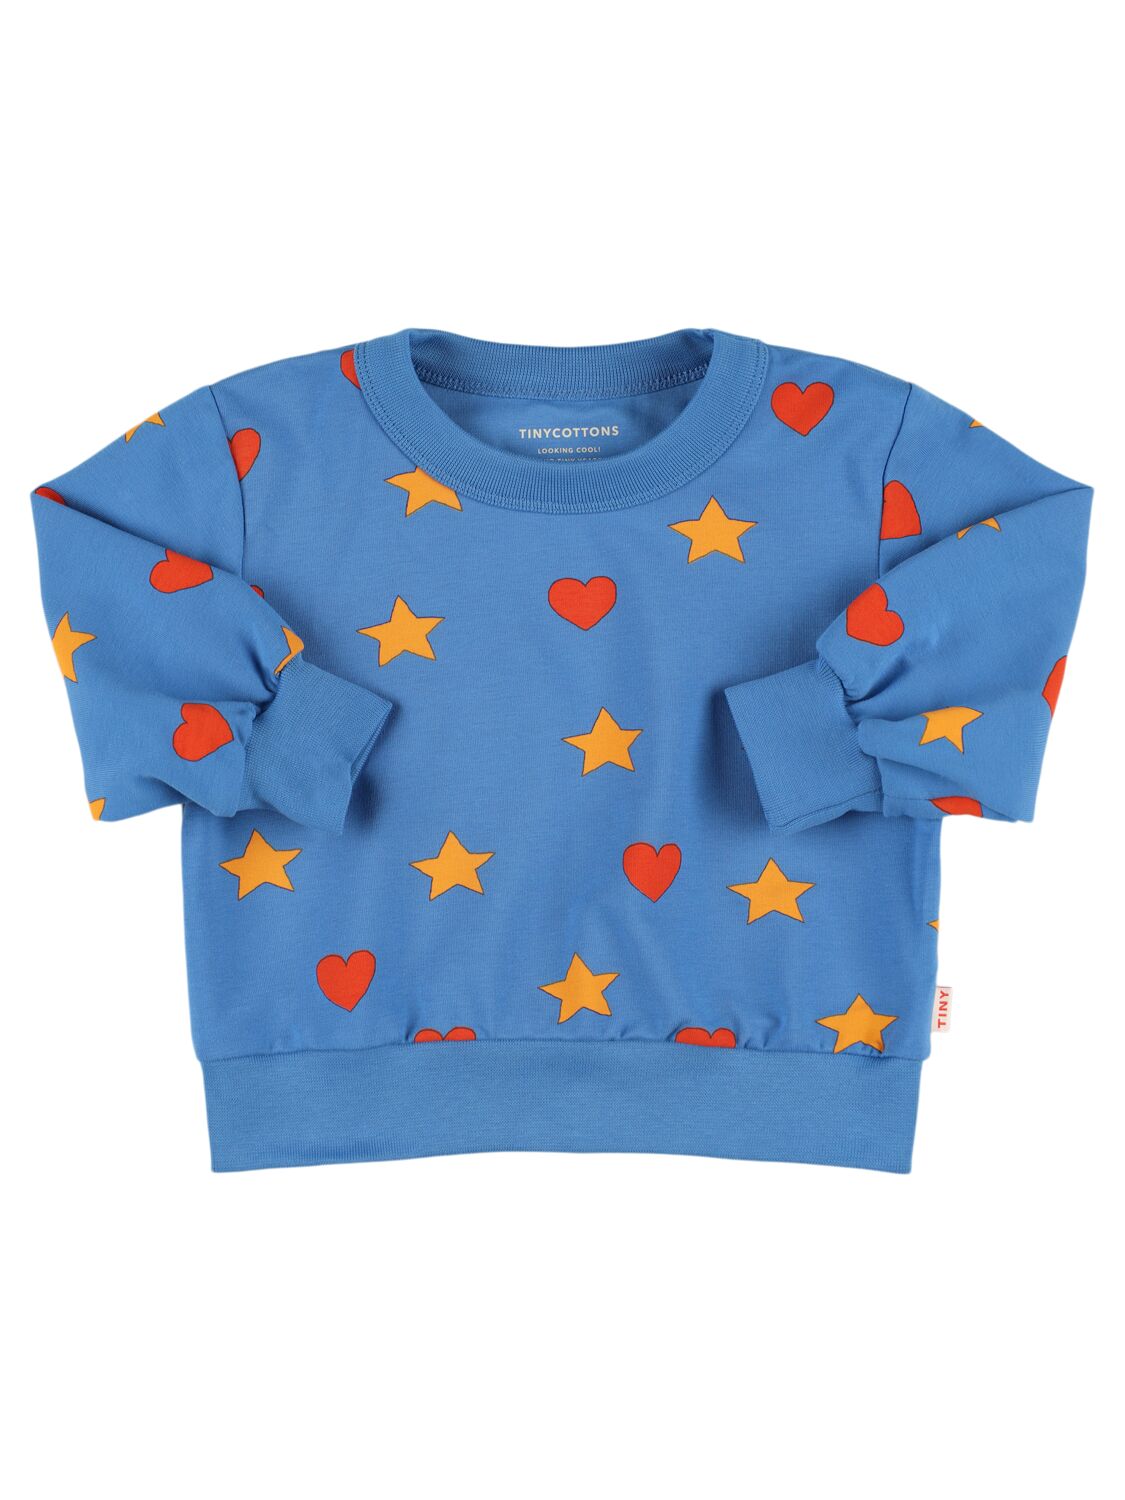 Tiny Cottons Kids' Printed Pima Cotton Sweatshirt In Blue